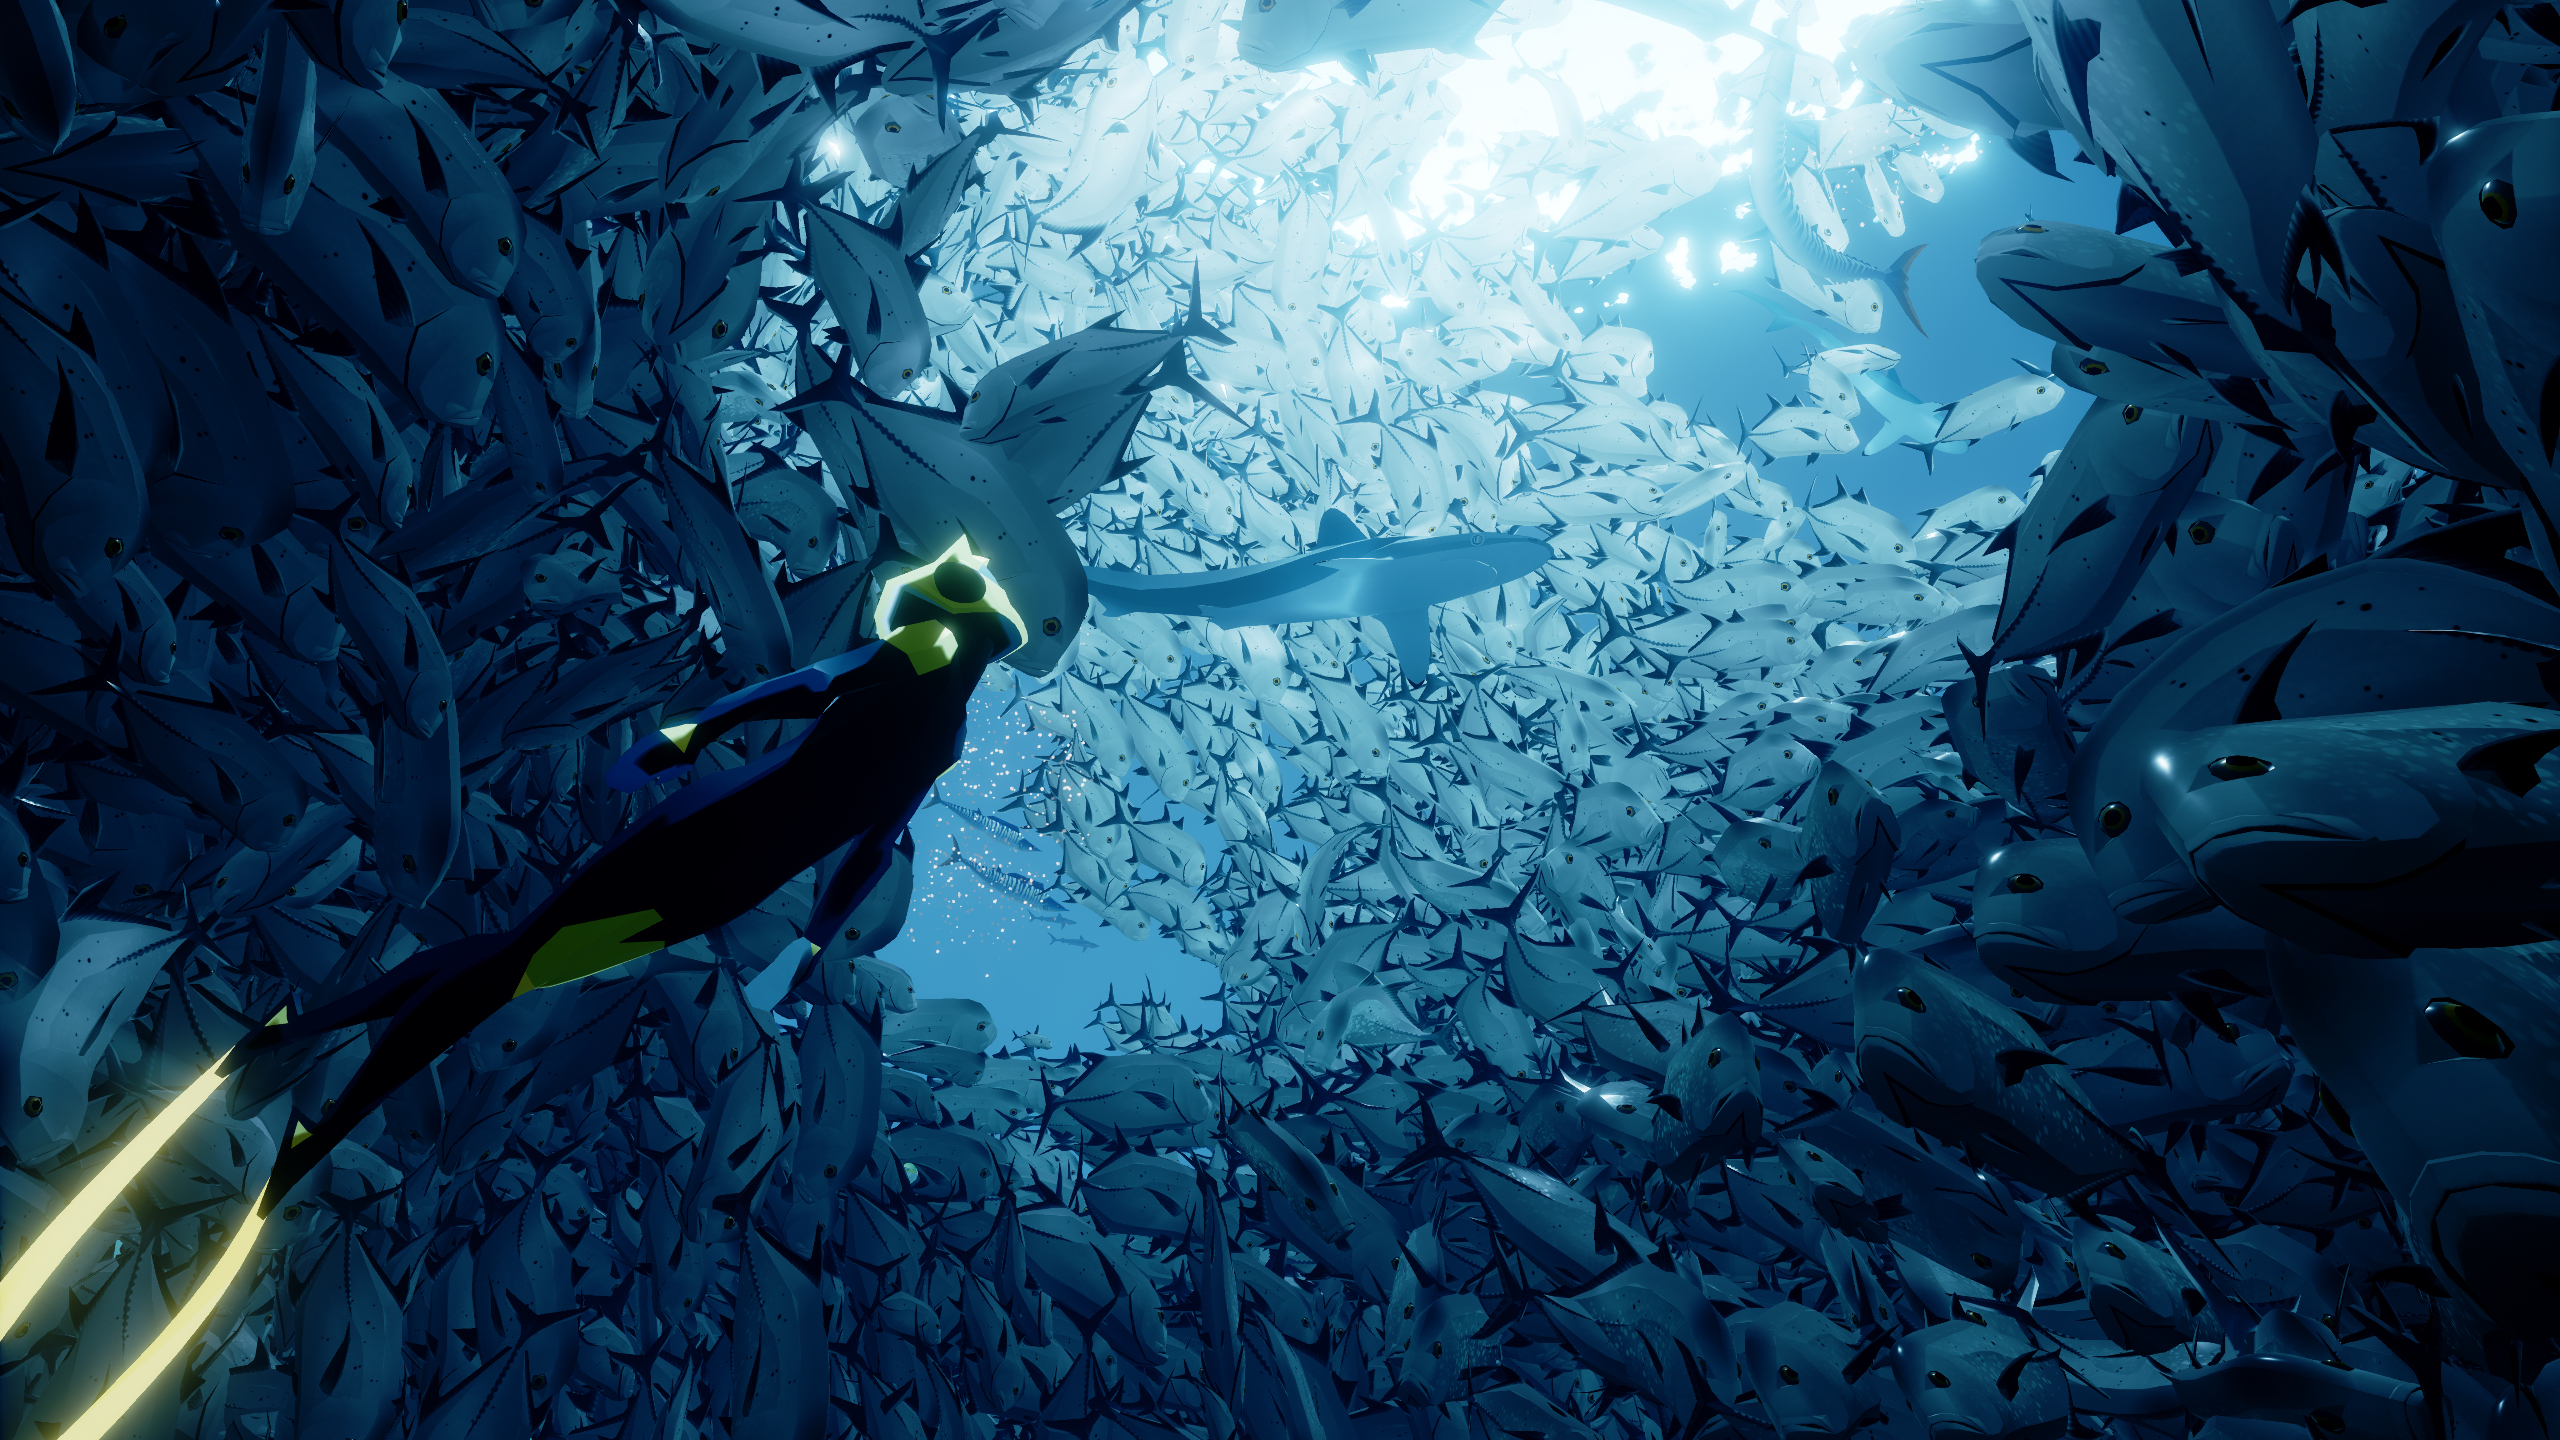 Water Underwater Divers Artwork Digital Art Shark Abzu Video Games 2560x1440